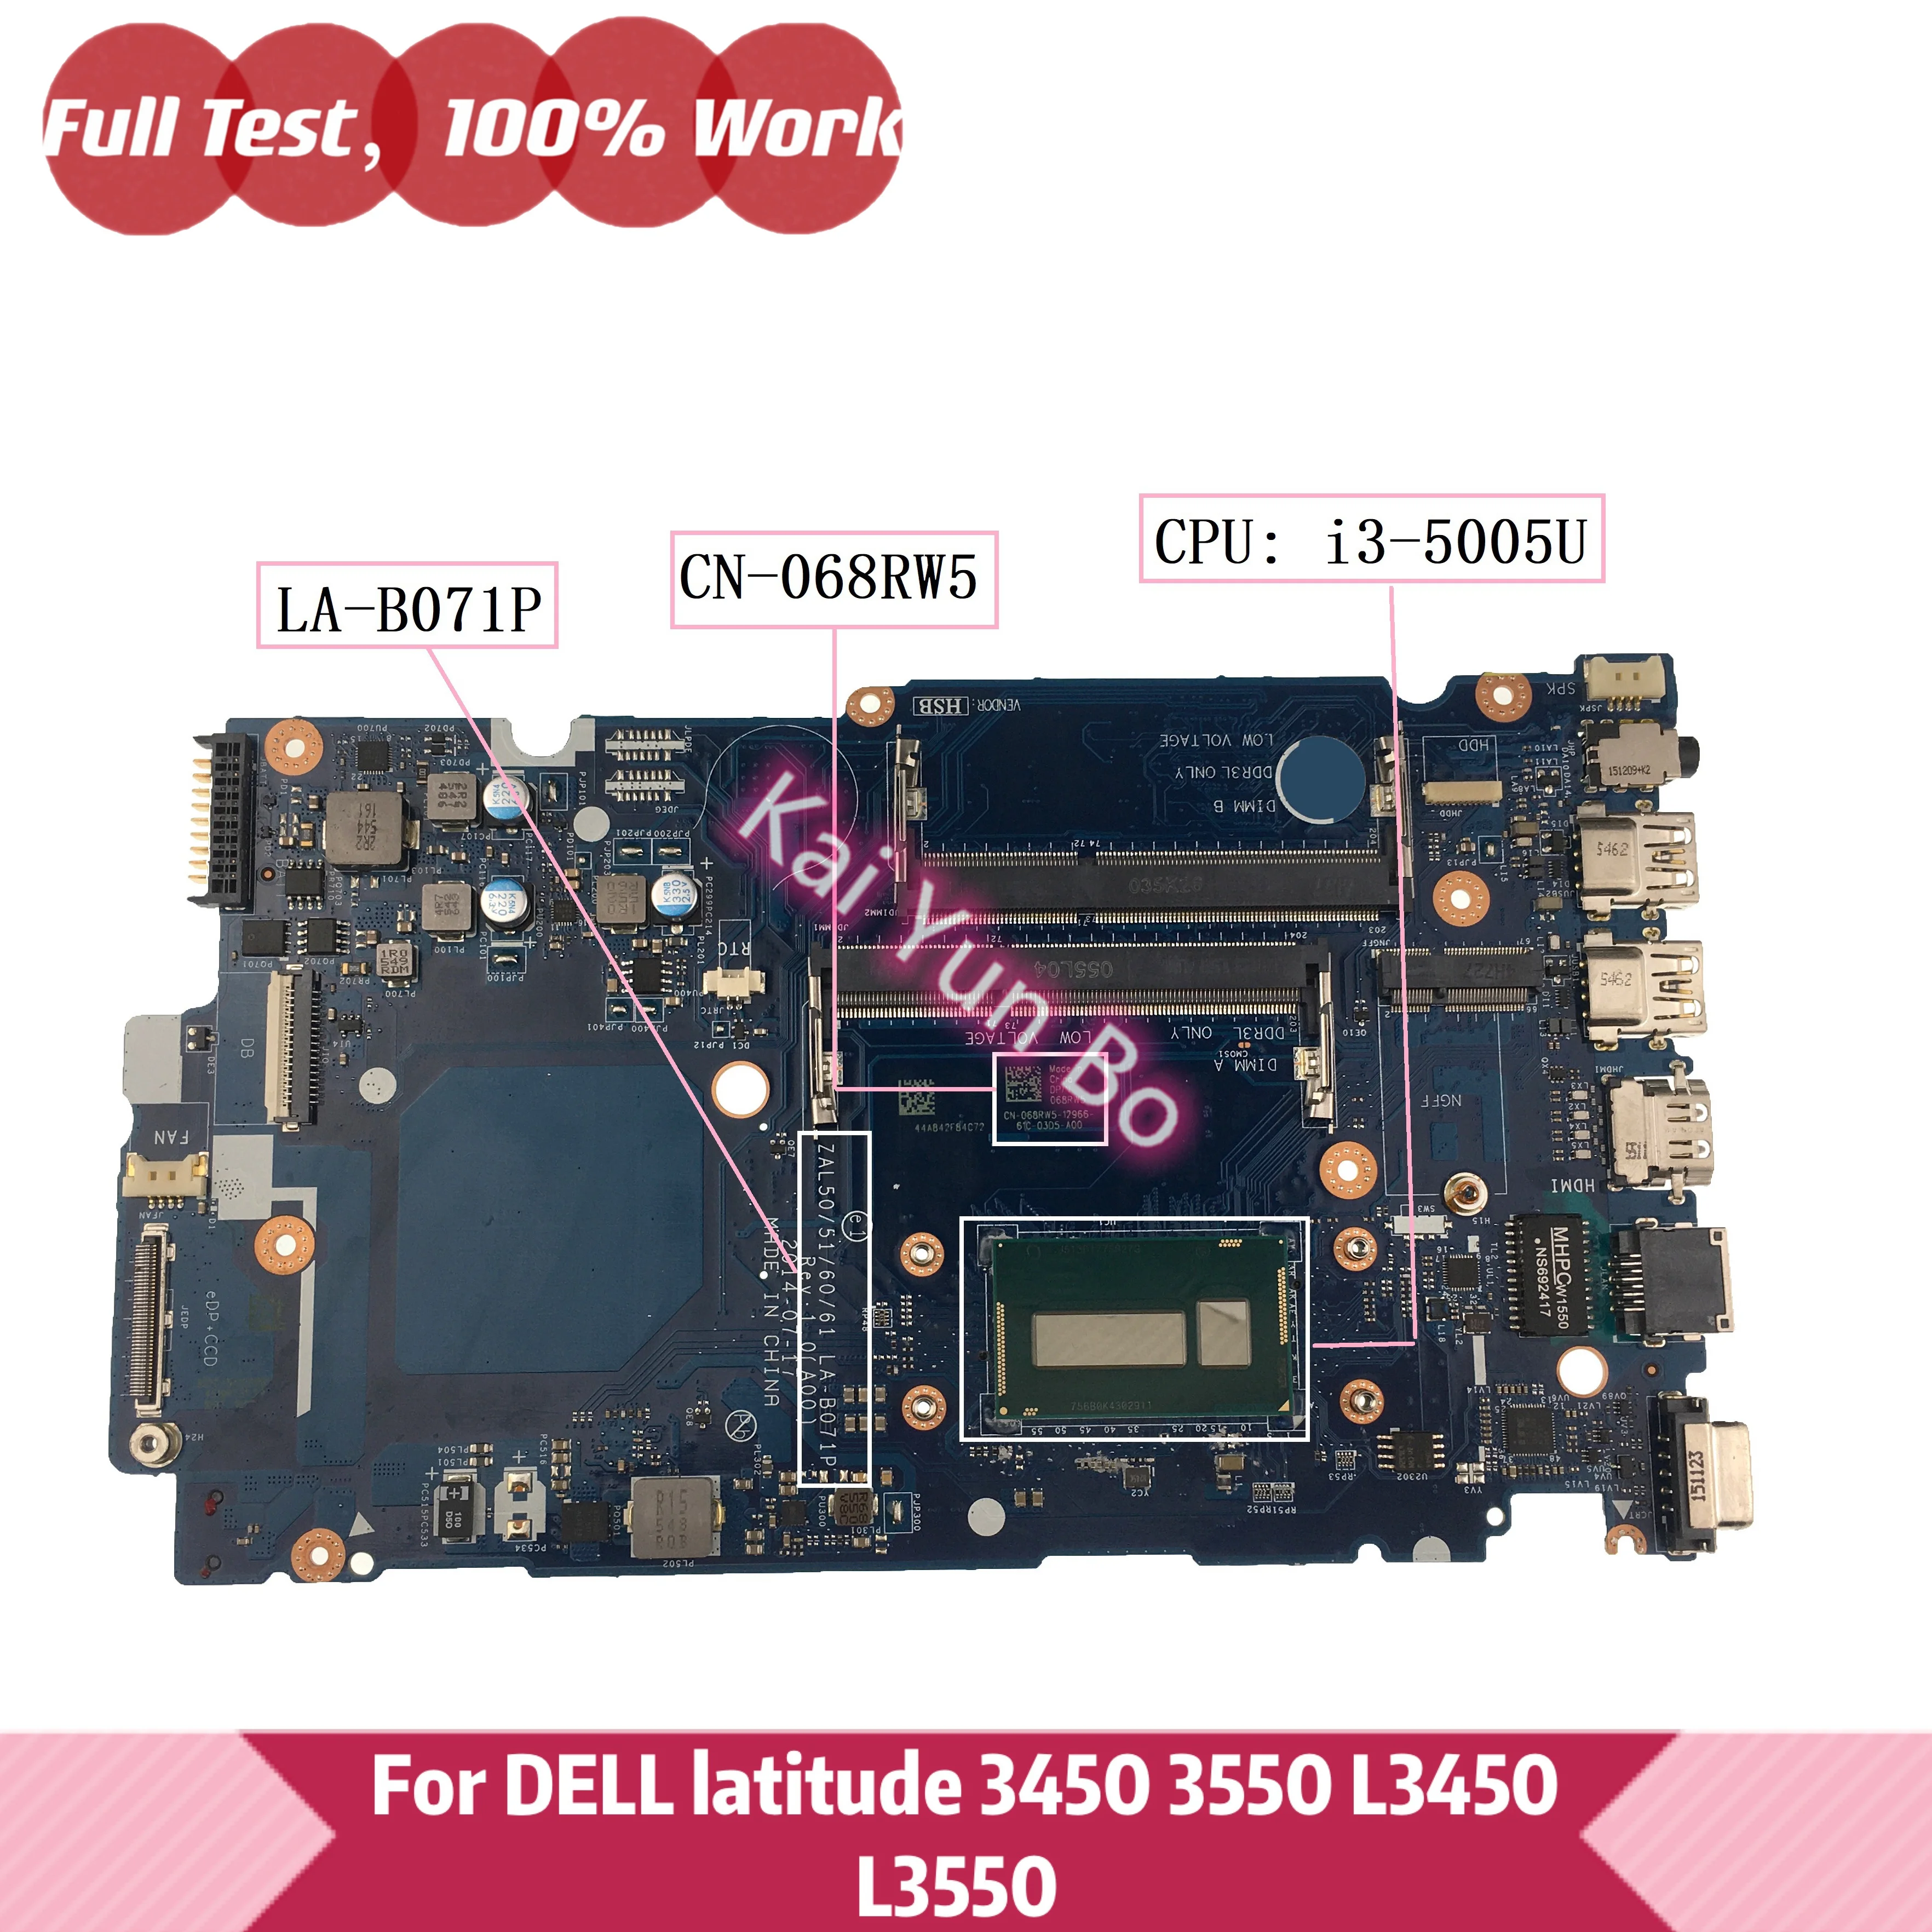 

CN-068RW5 68RW5 068RW5 For Dell Latitude 3450 L3450 L3550 3550 Laptop Motherboard ZAL50/51/60/61 LA-B071P With I3-5005U CPU DDR3